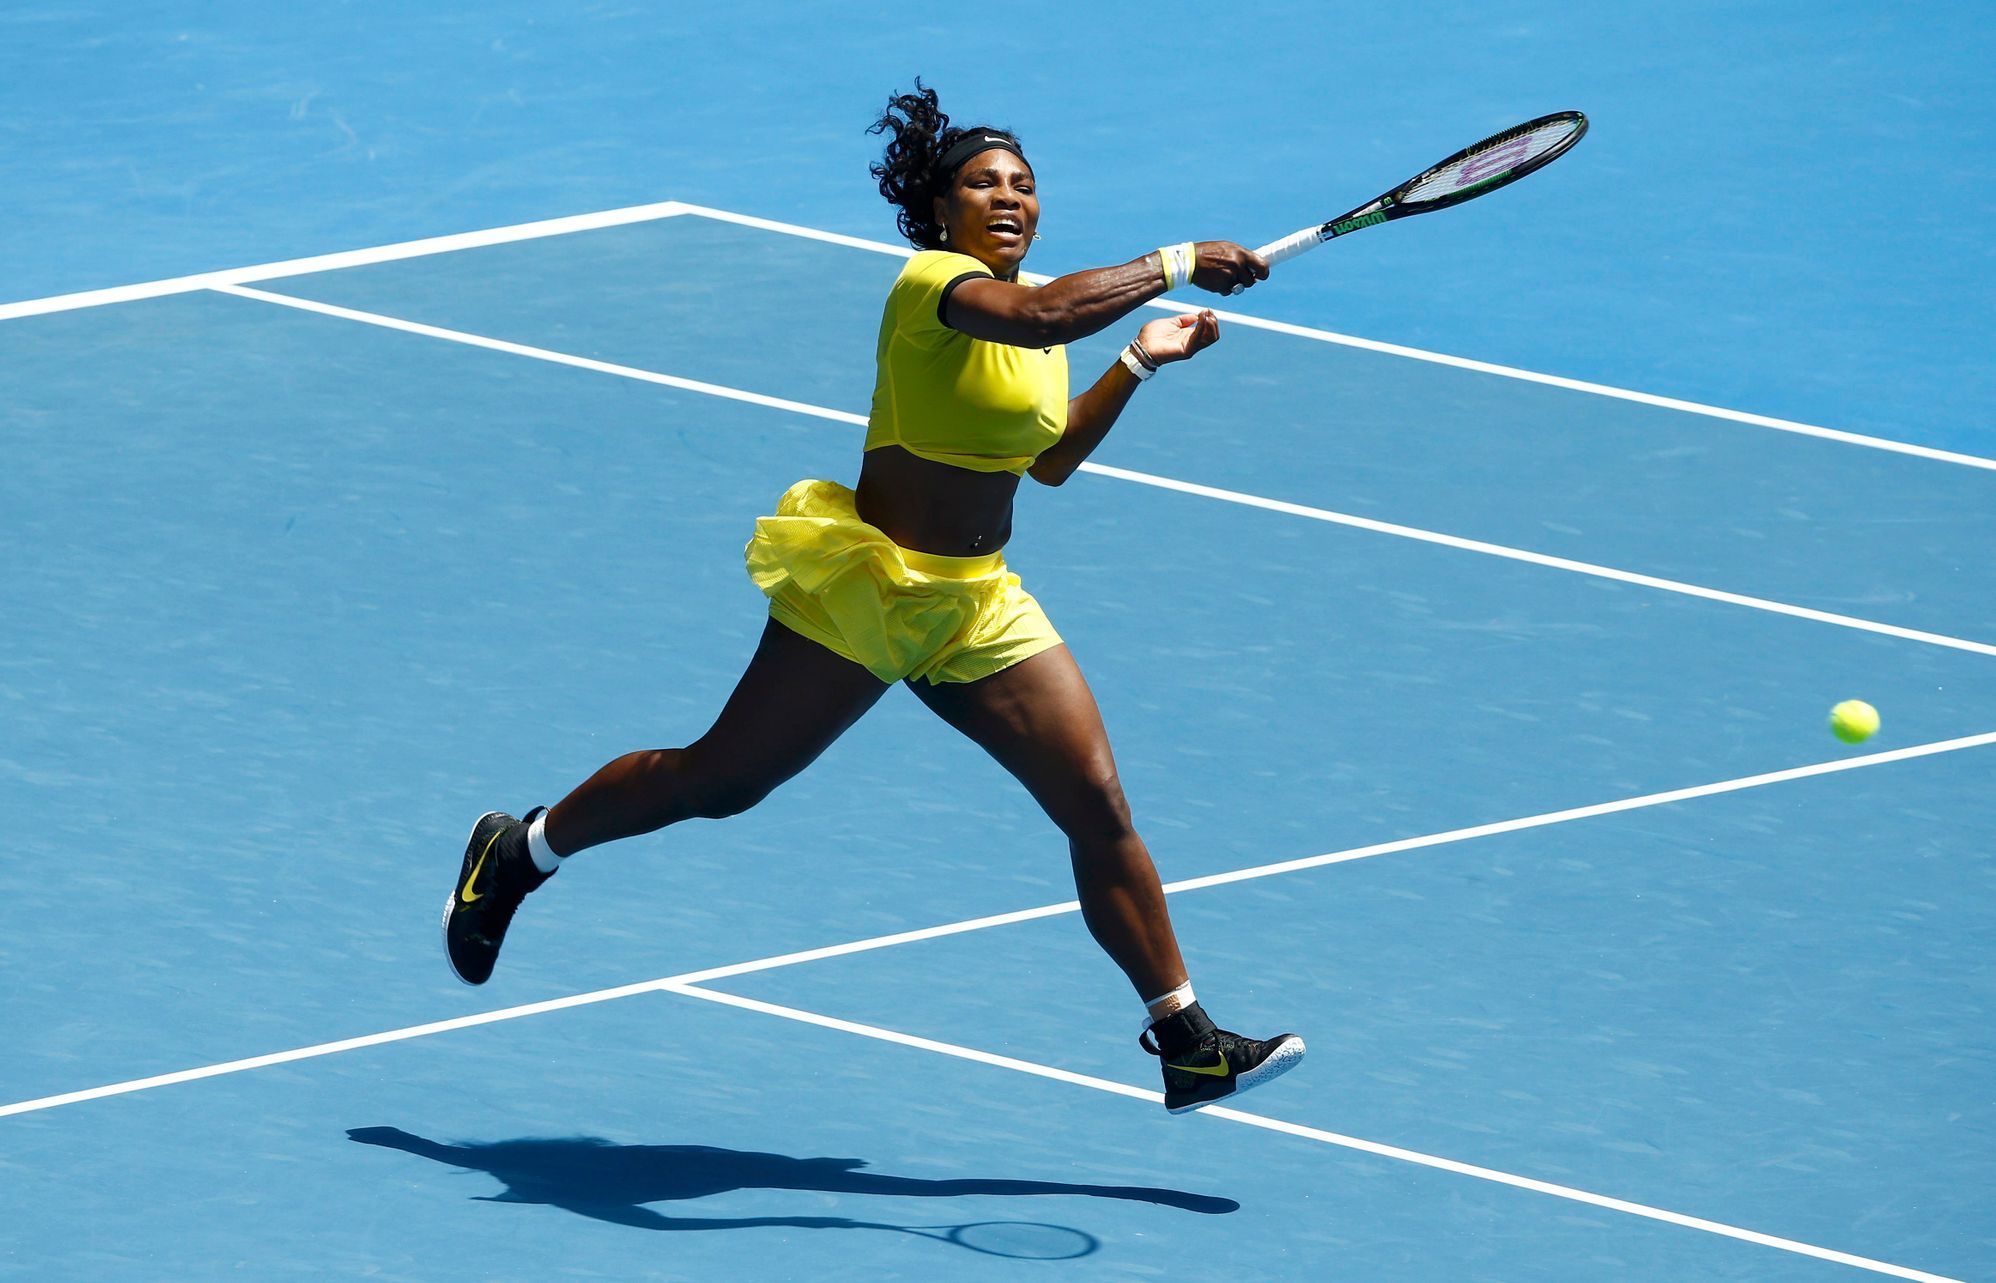 Serena Williamsová na Australian Open 2016